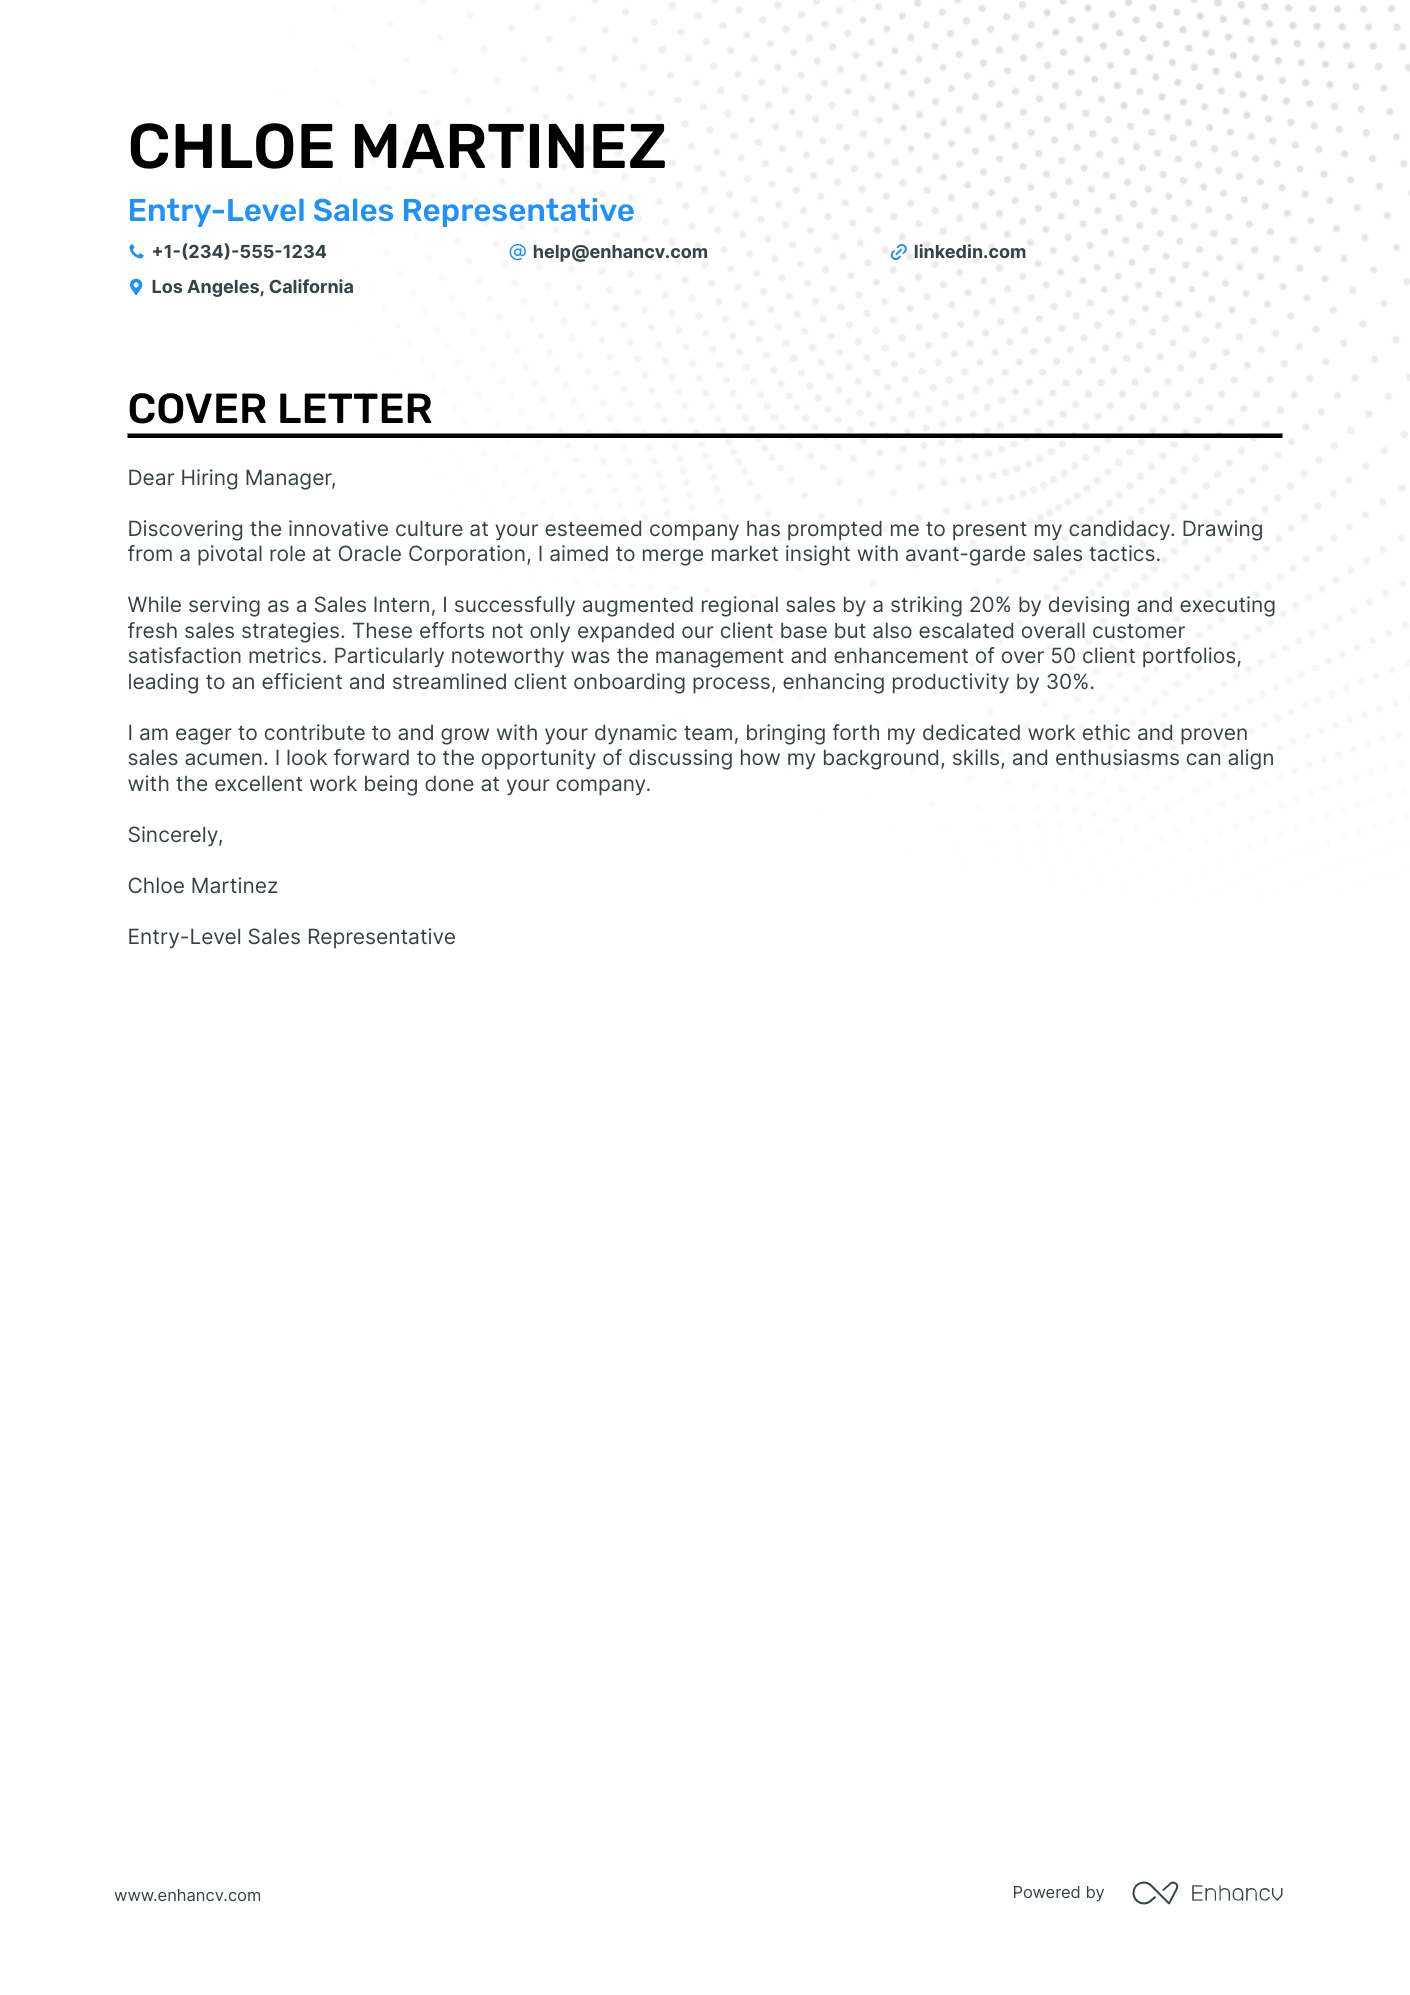 cover letter as sales representative